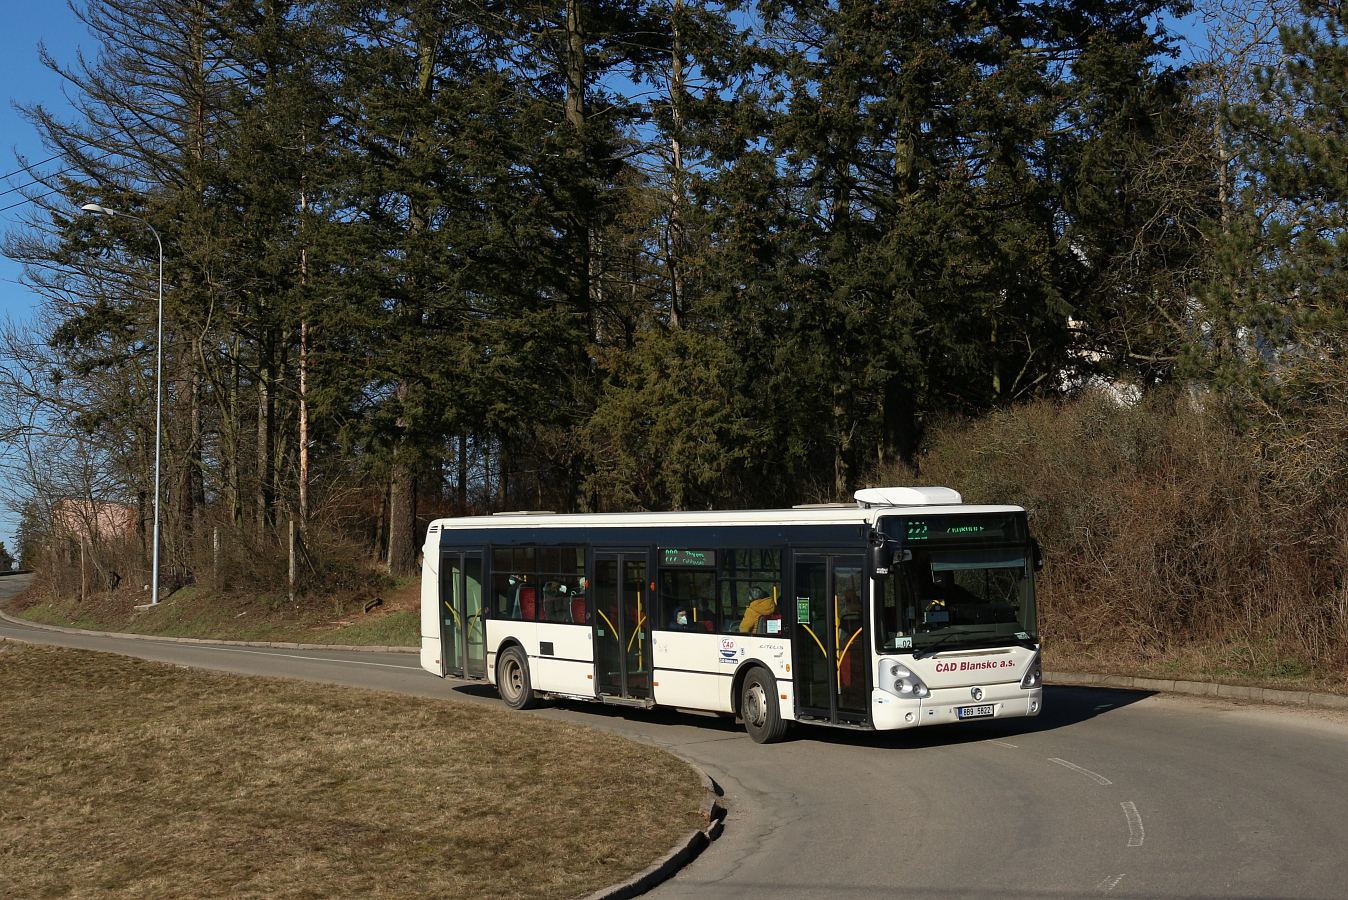 Blansko, Irisbus Citelis 12M # 8B9 5822